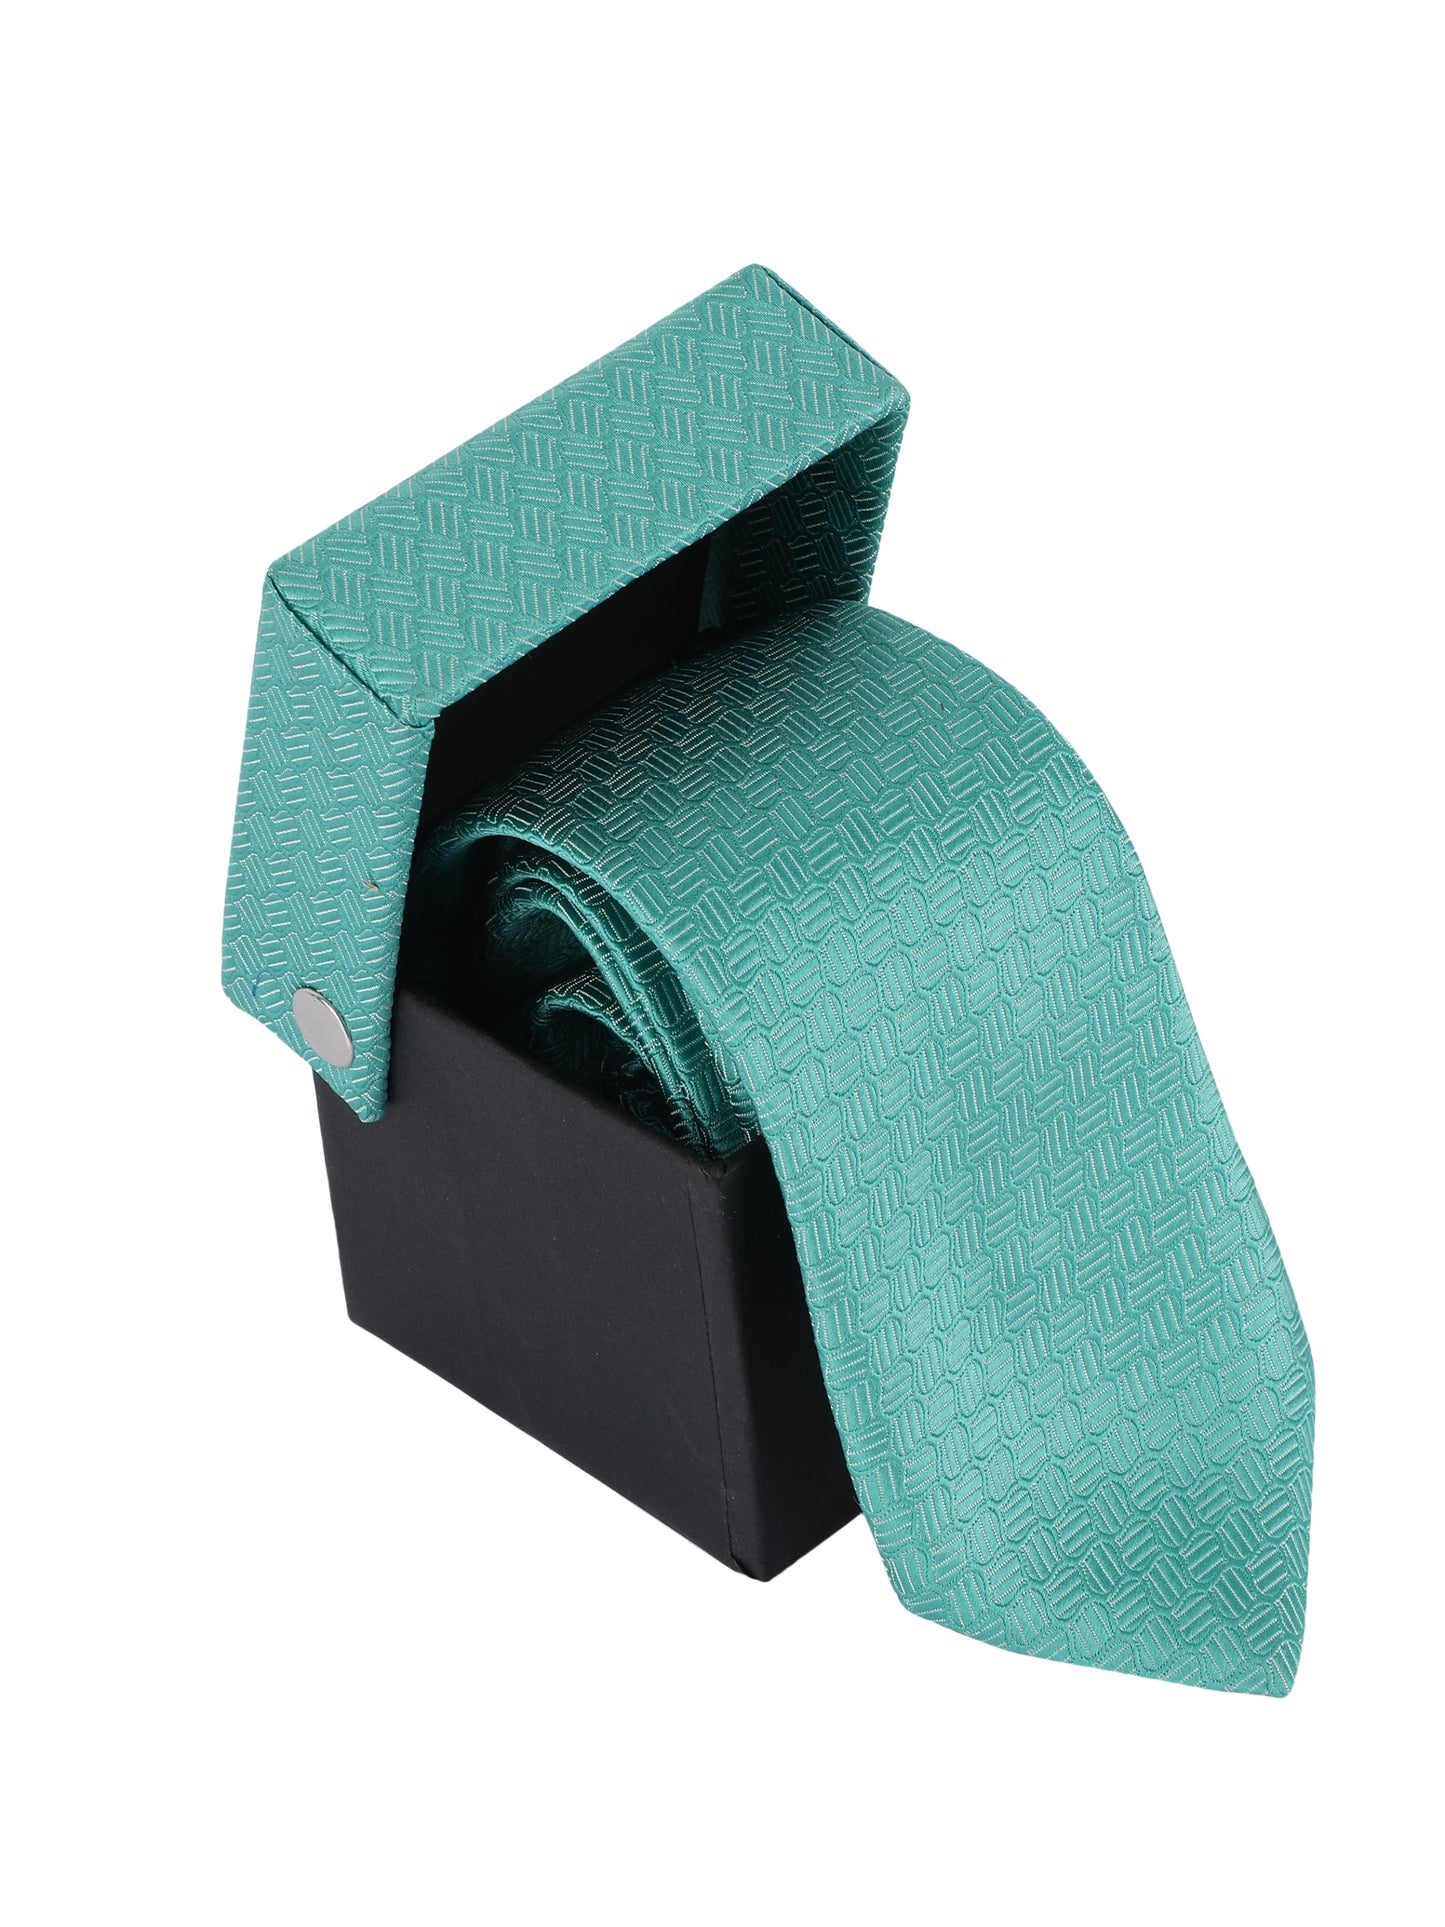 Alvaro Castagnino Microfiber Turquoise Colored Printed Necktie with same fabric box for Men